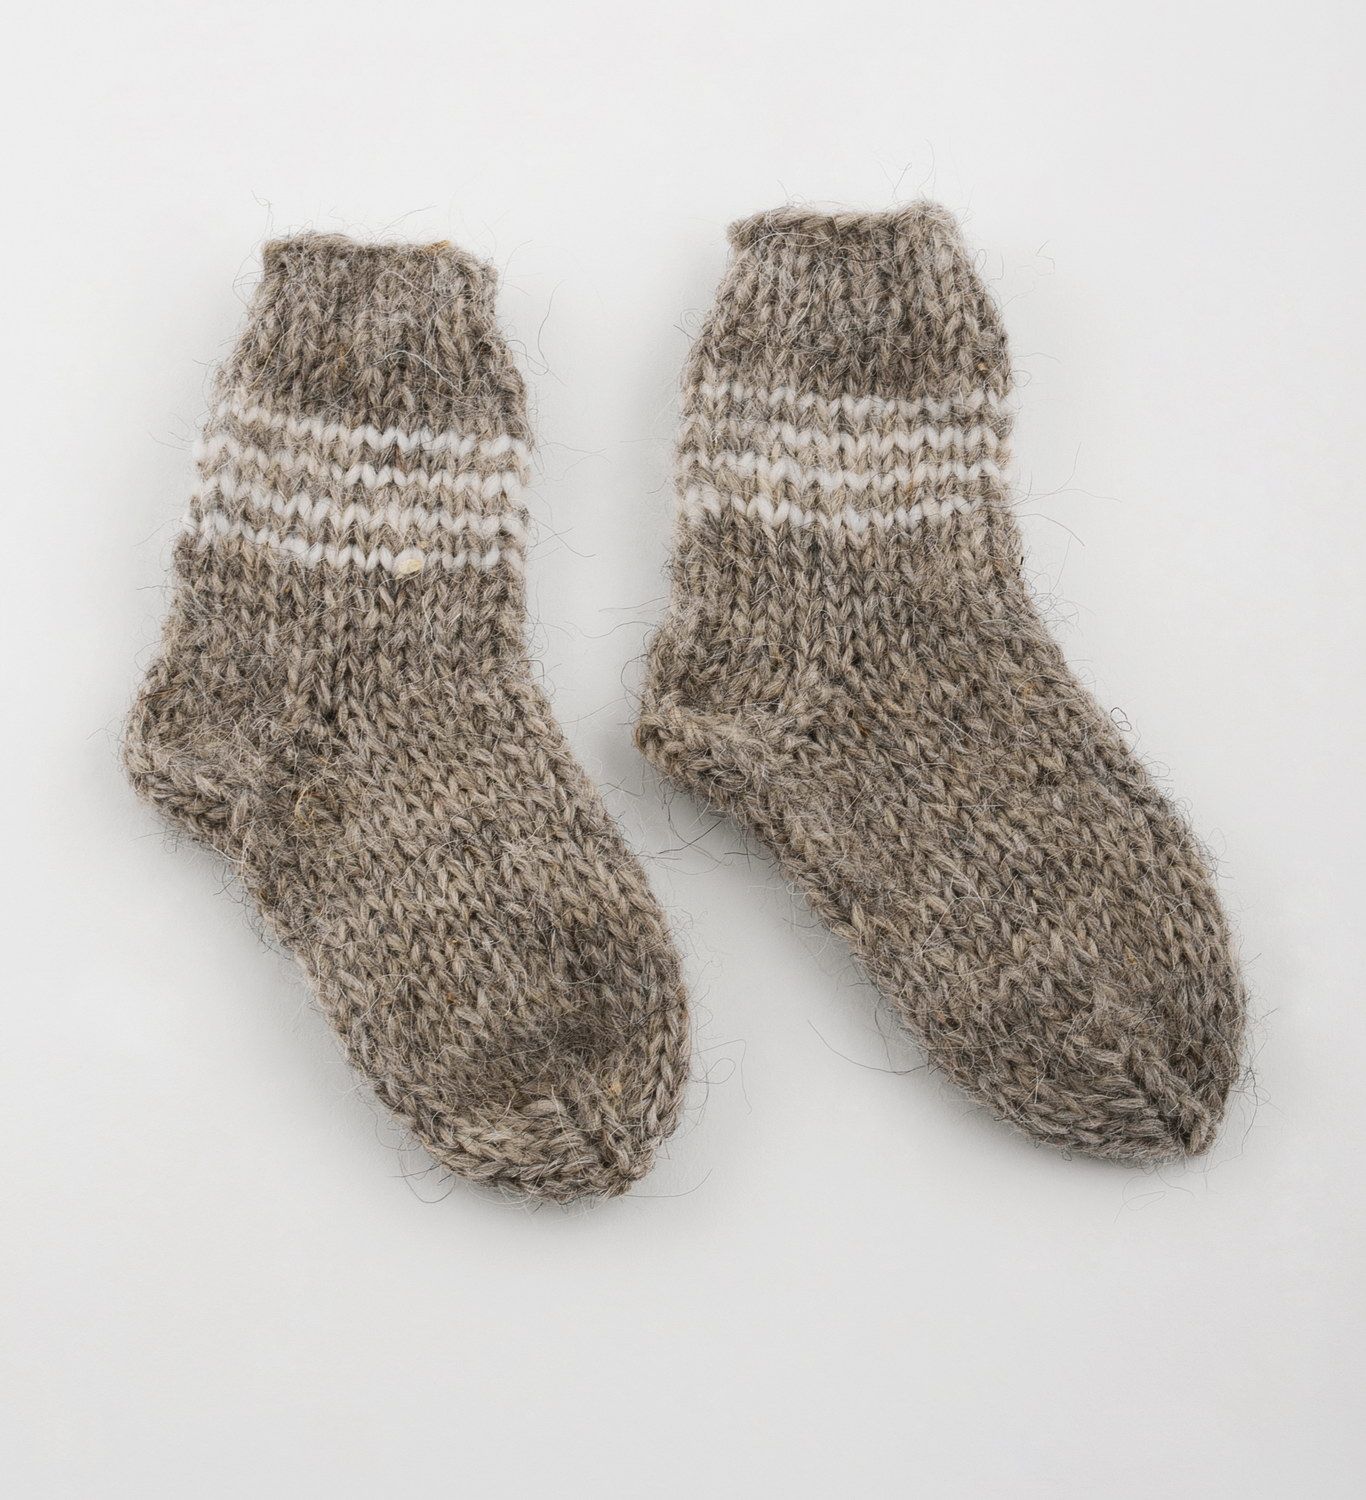 Children's socks made of natural wool photo 9